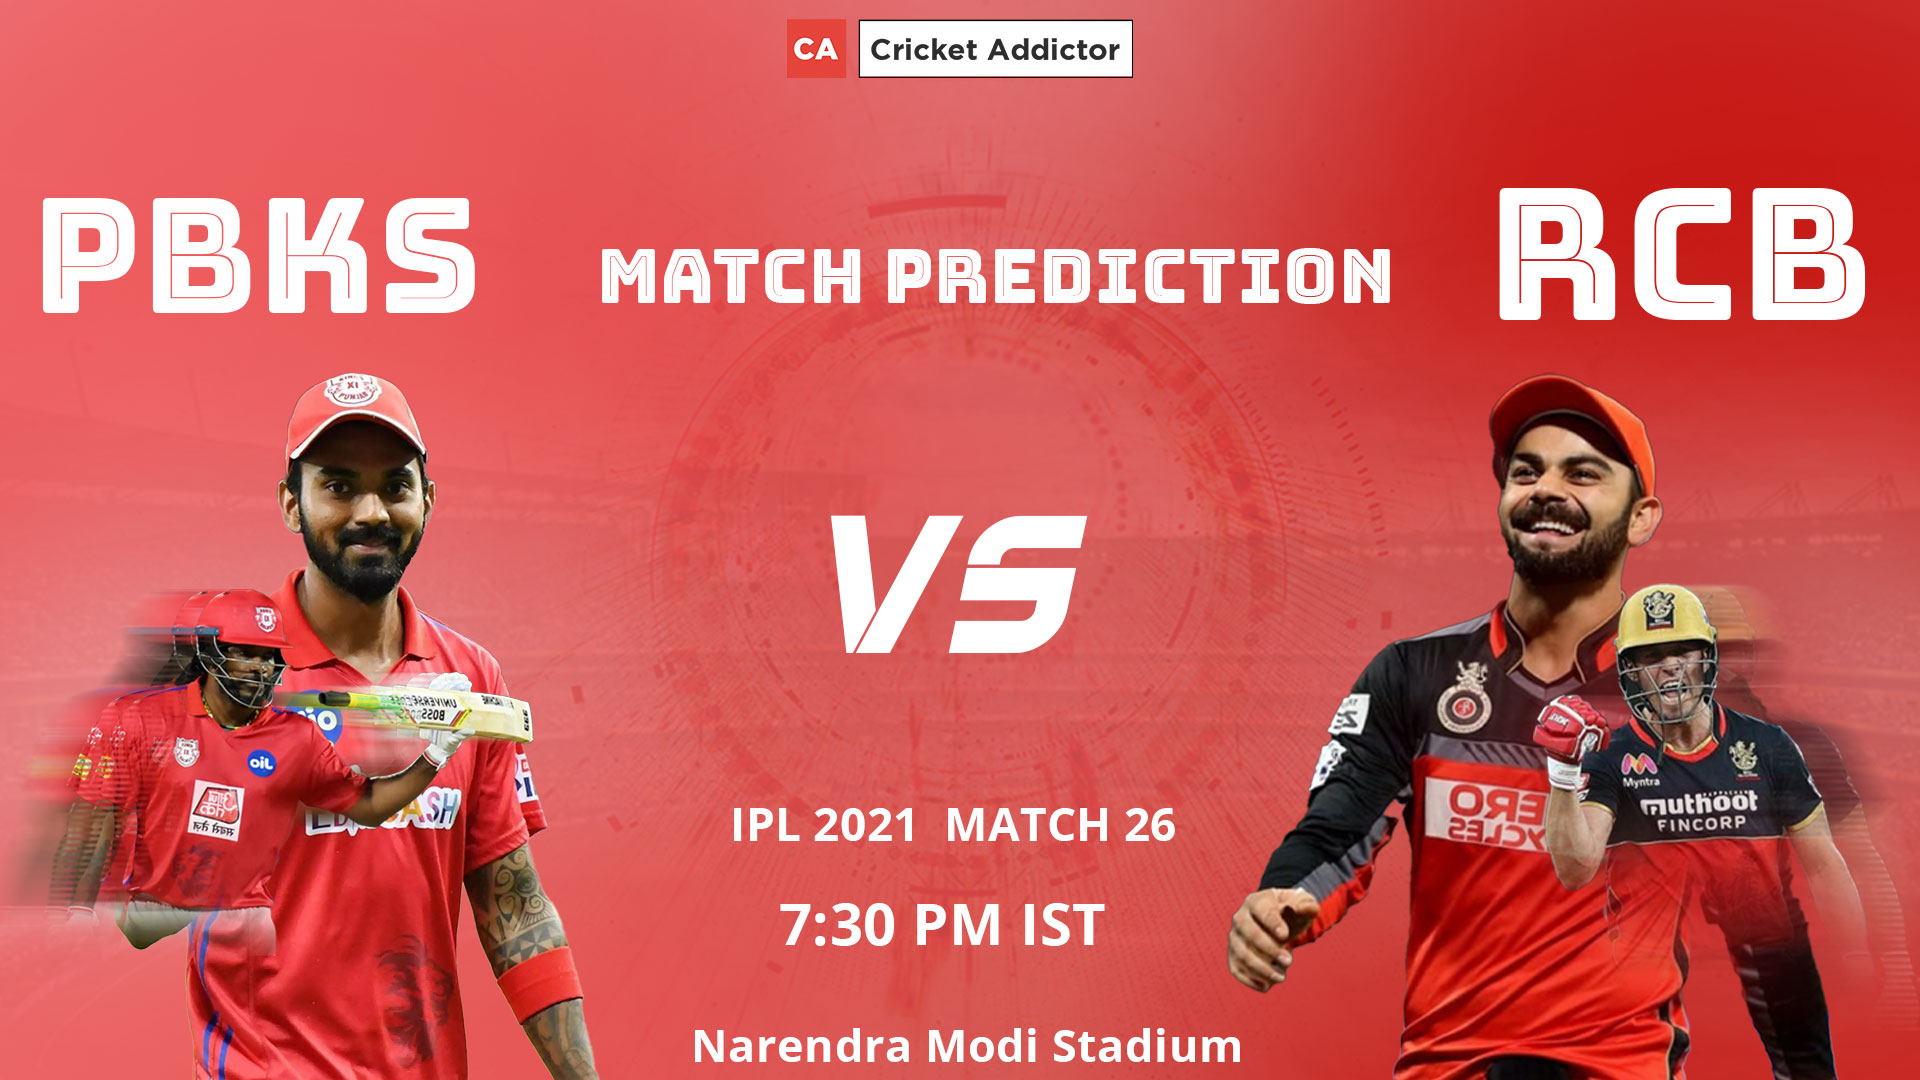 IPL 2021, Match 26 PBKS vs RCB